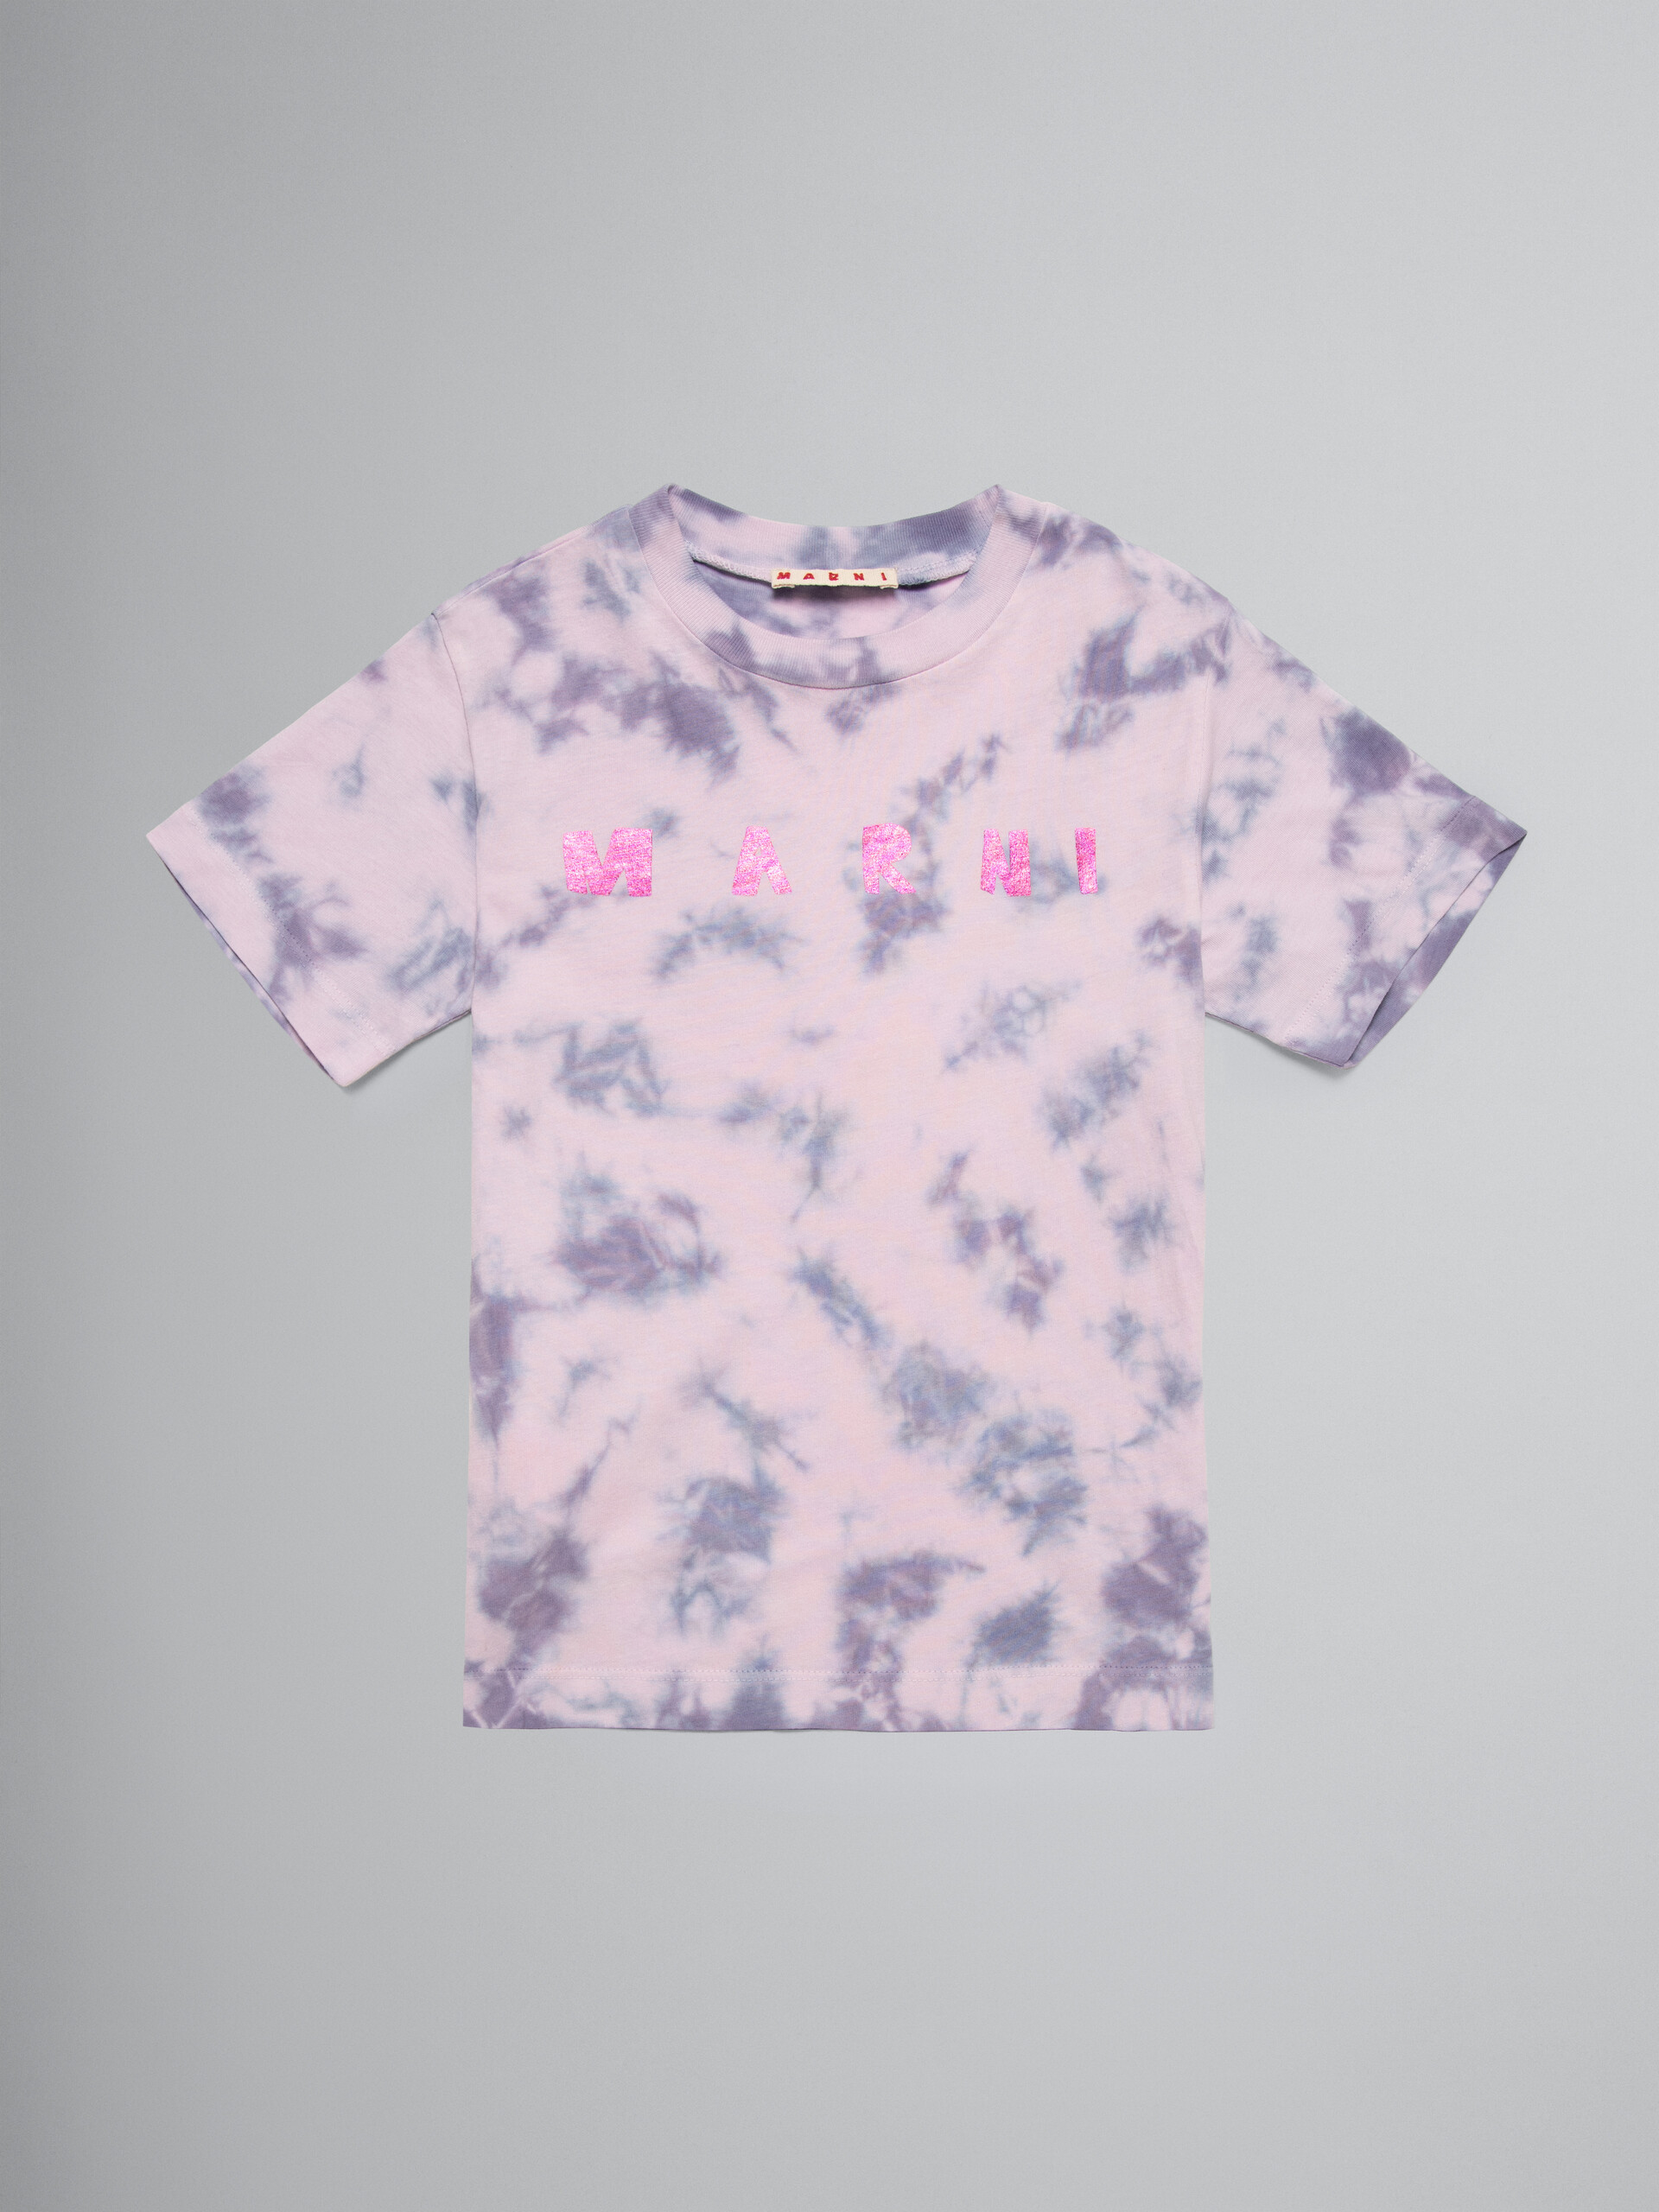 Lavender tie-dye T-shirt with metallic logo print - T-shirts - Image 1